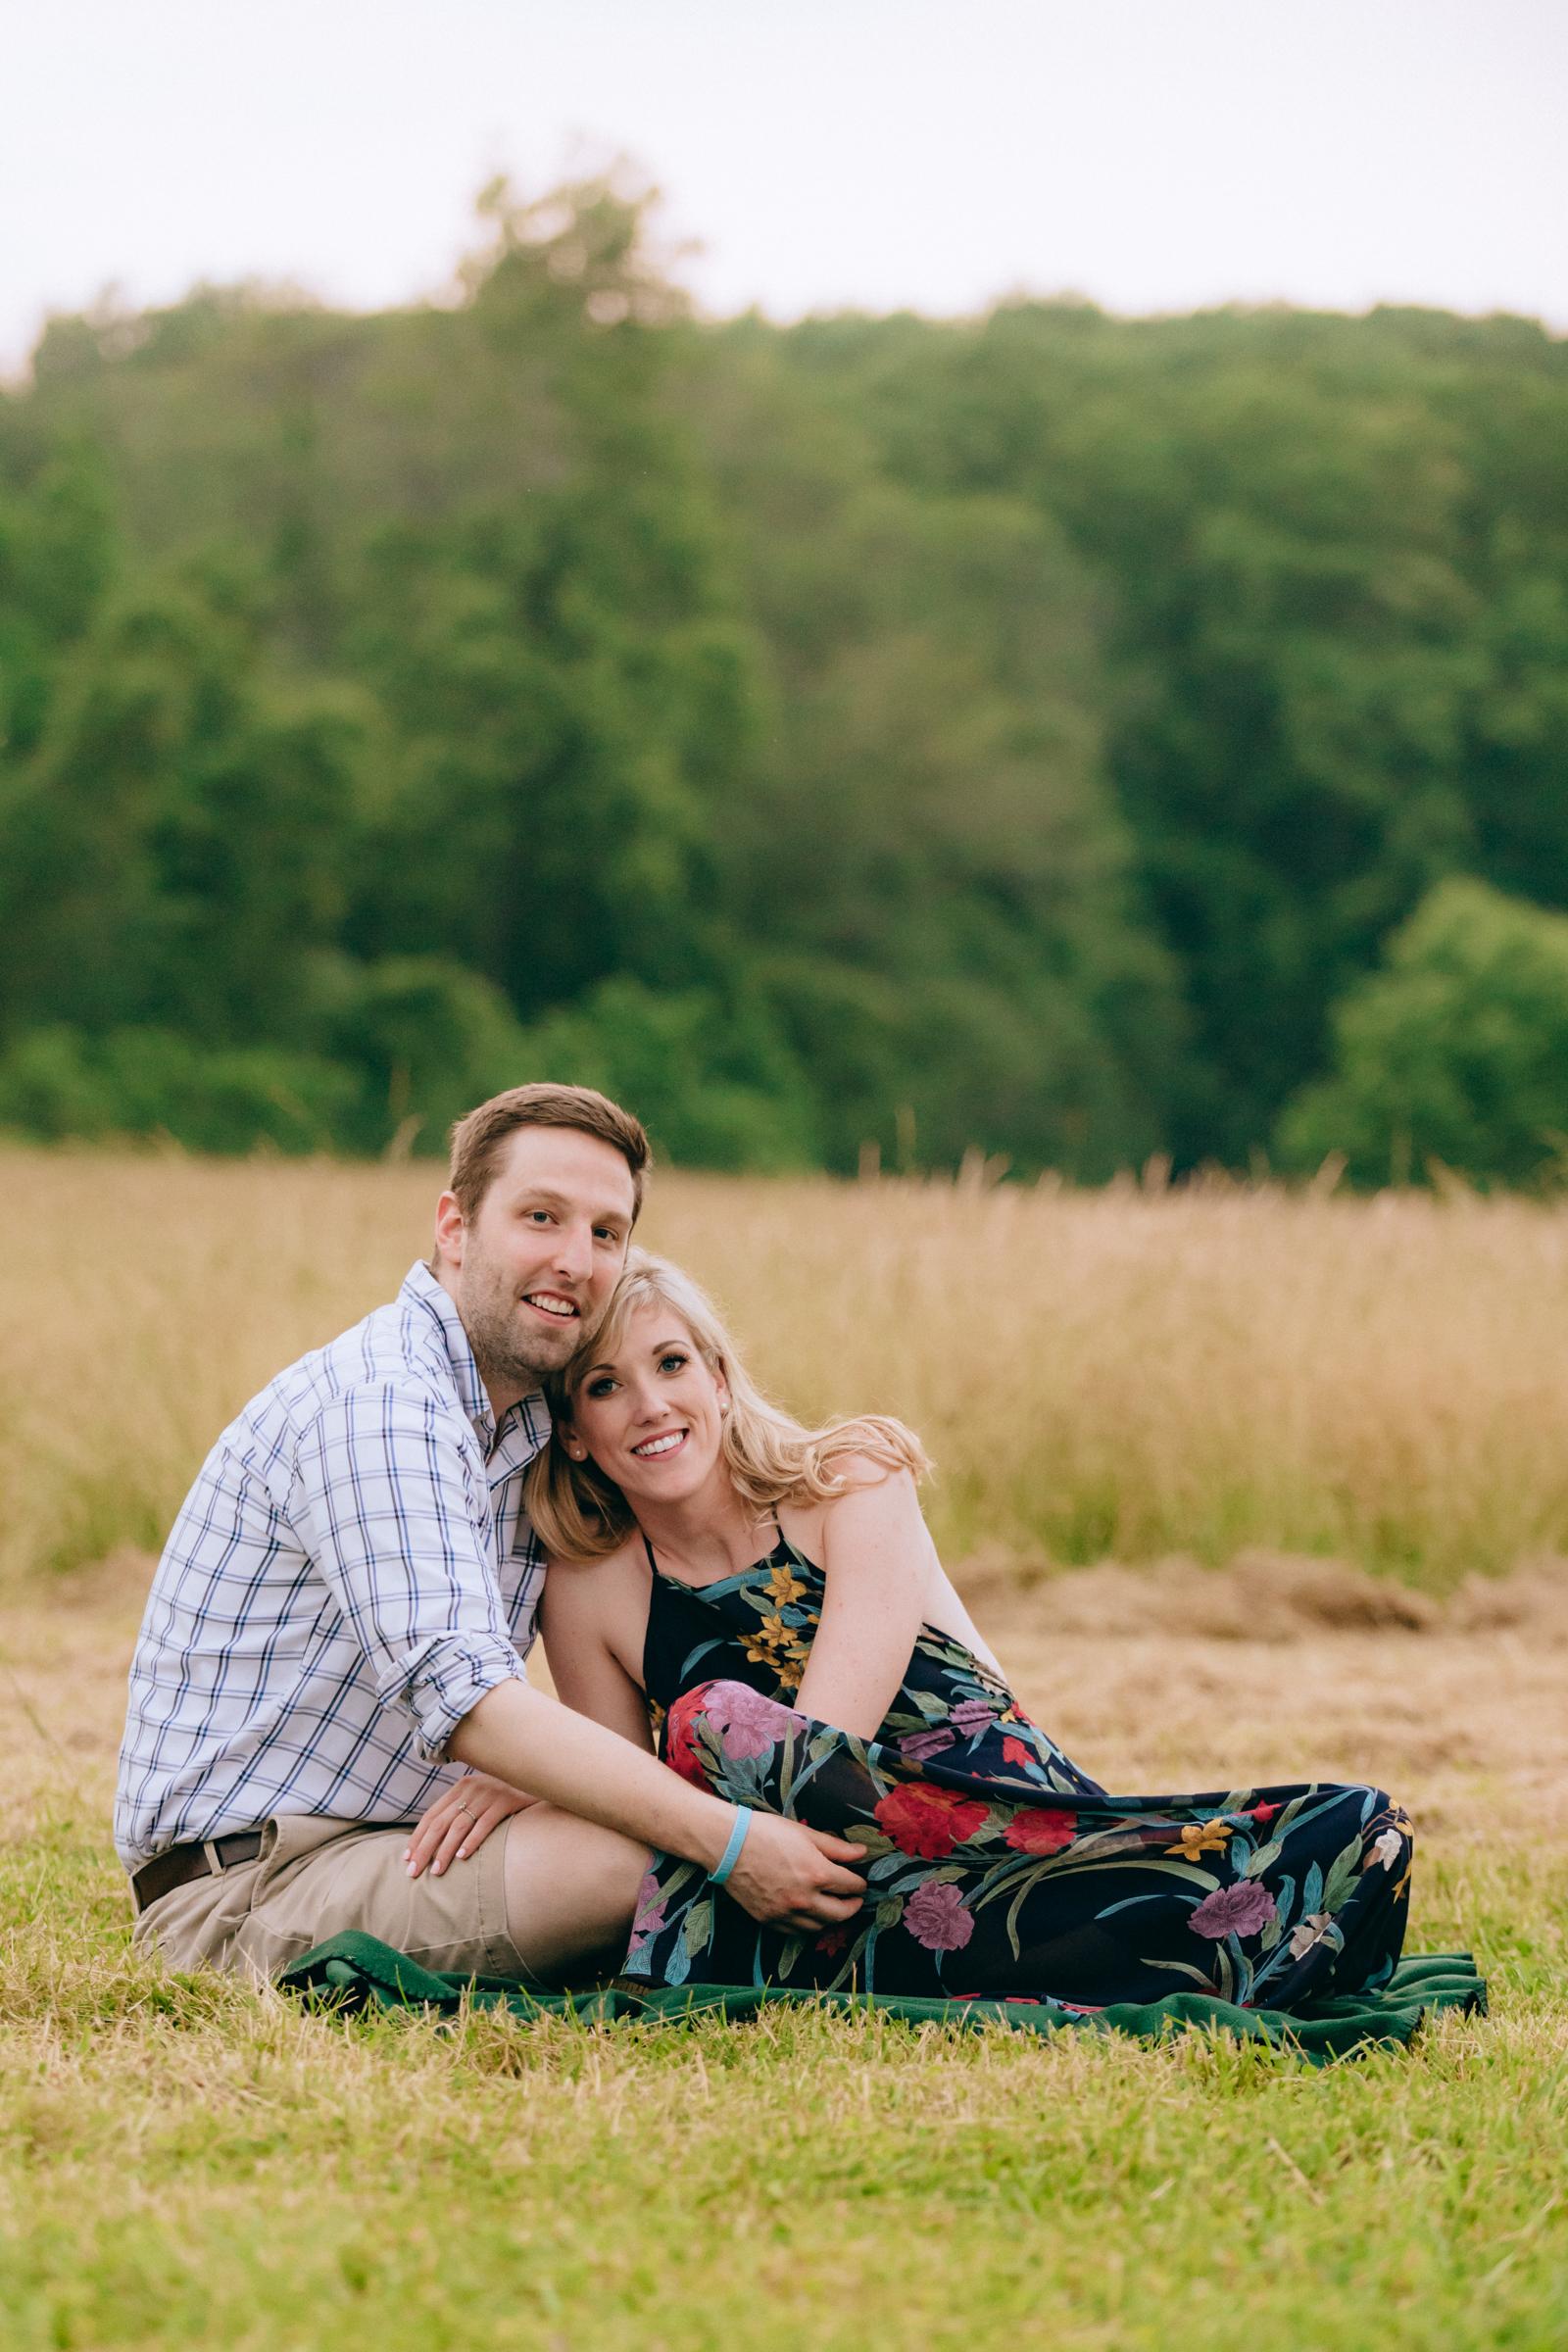 The Wedding Website of Megan Kurtzman and Jason Vogt